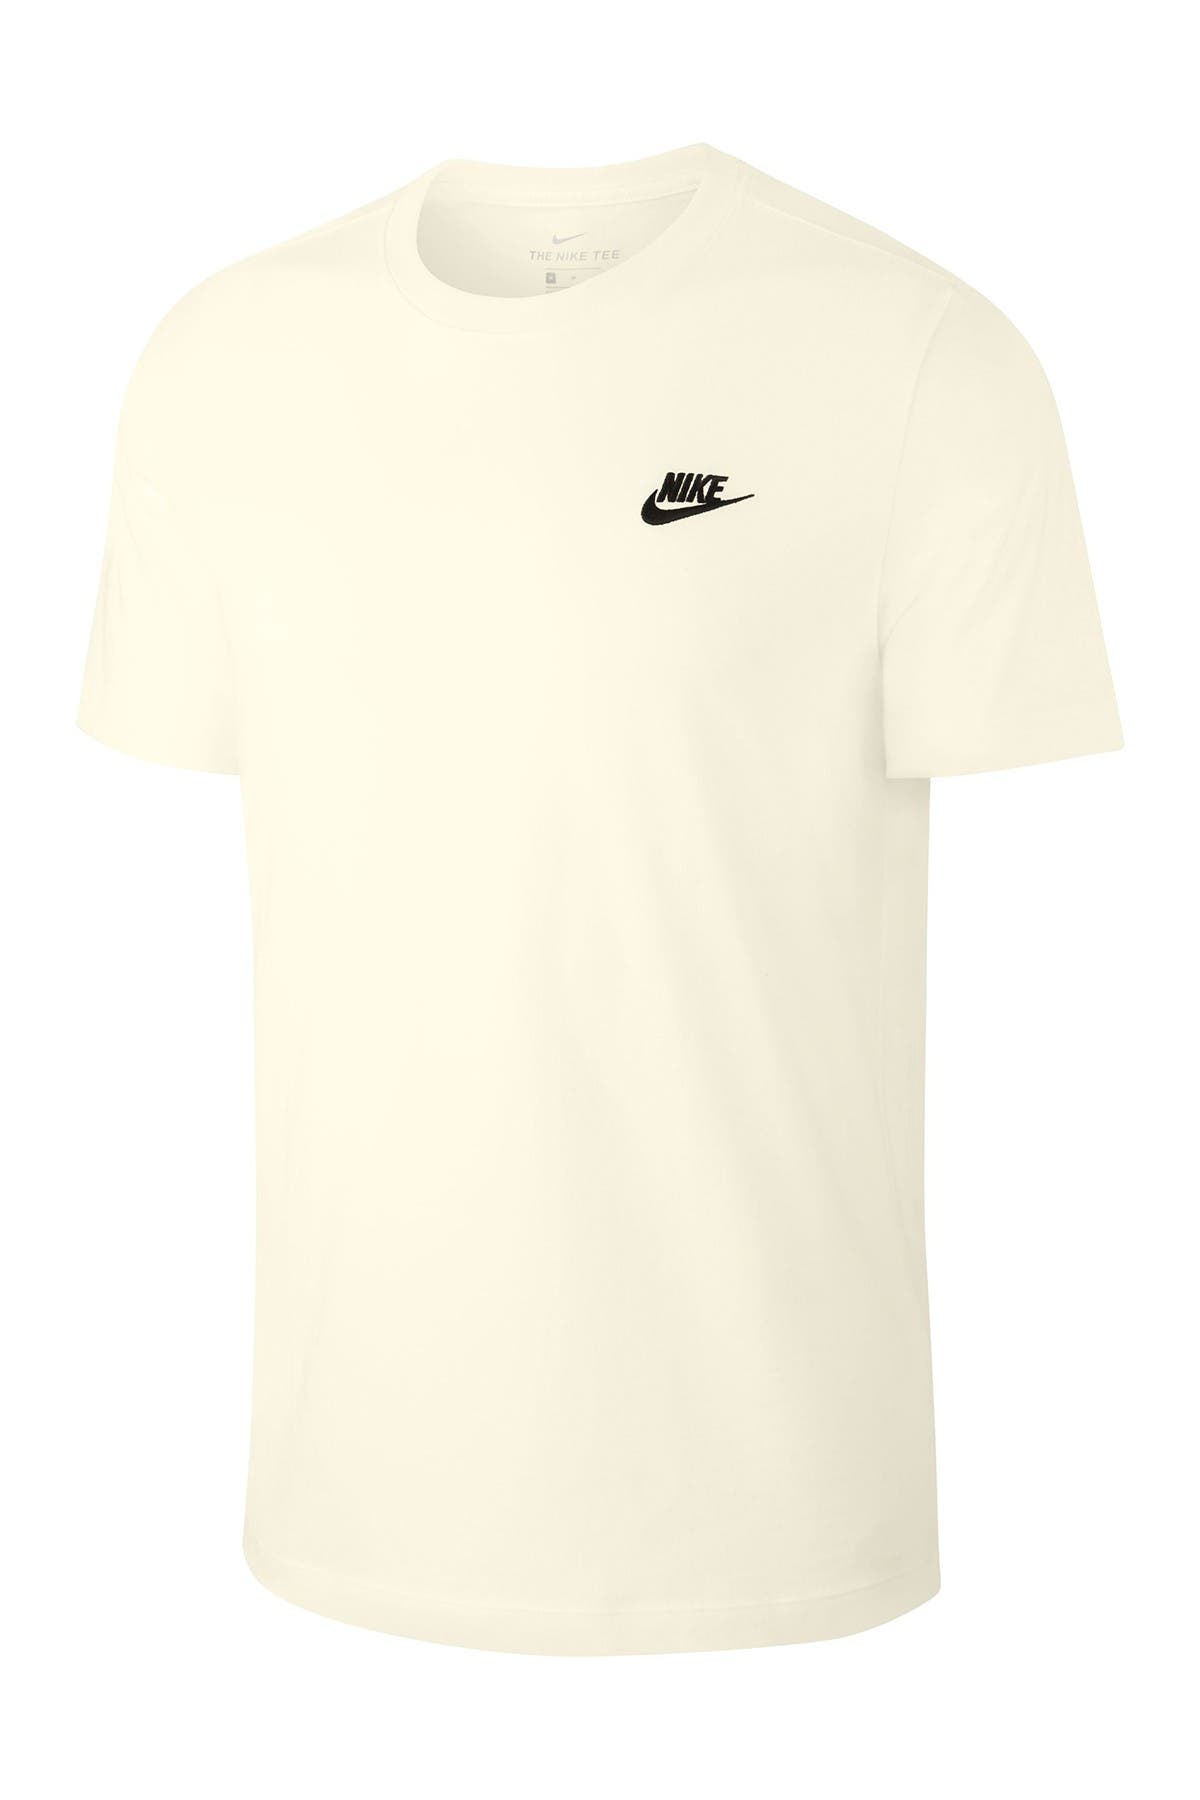 Nike Short Sleeve Club T-shirt In 133 Sail/black